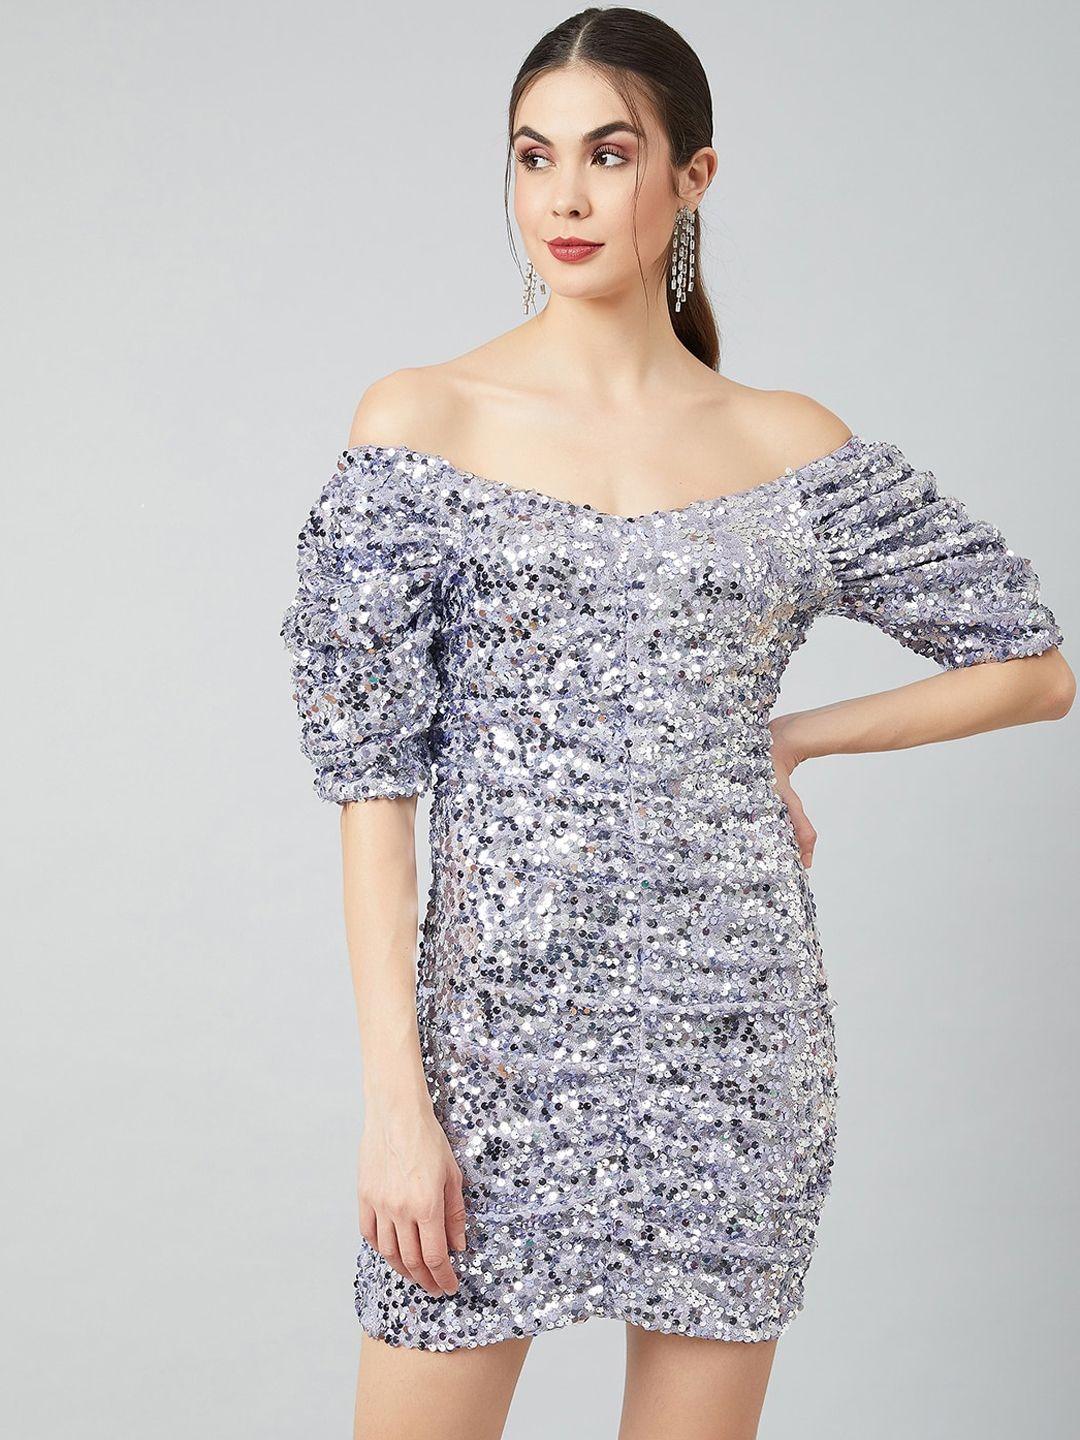 athena women lavender embellished bodycon dress